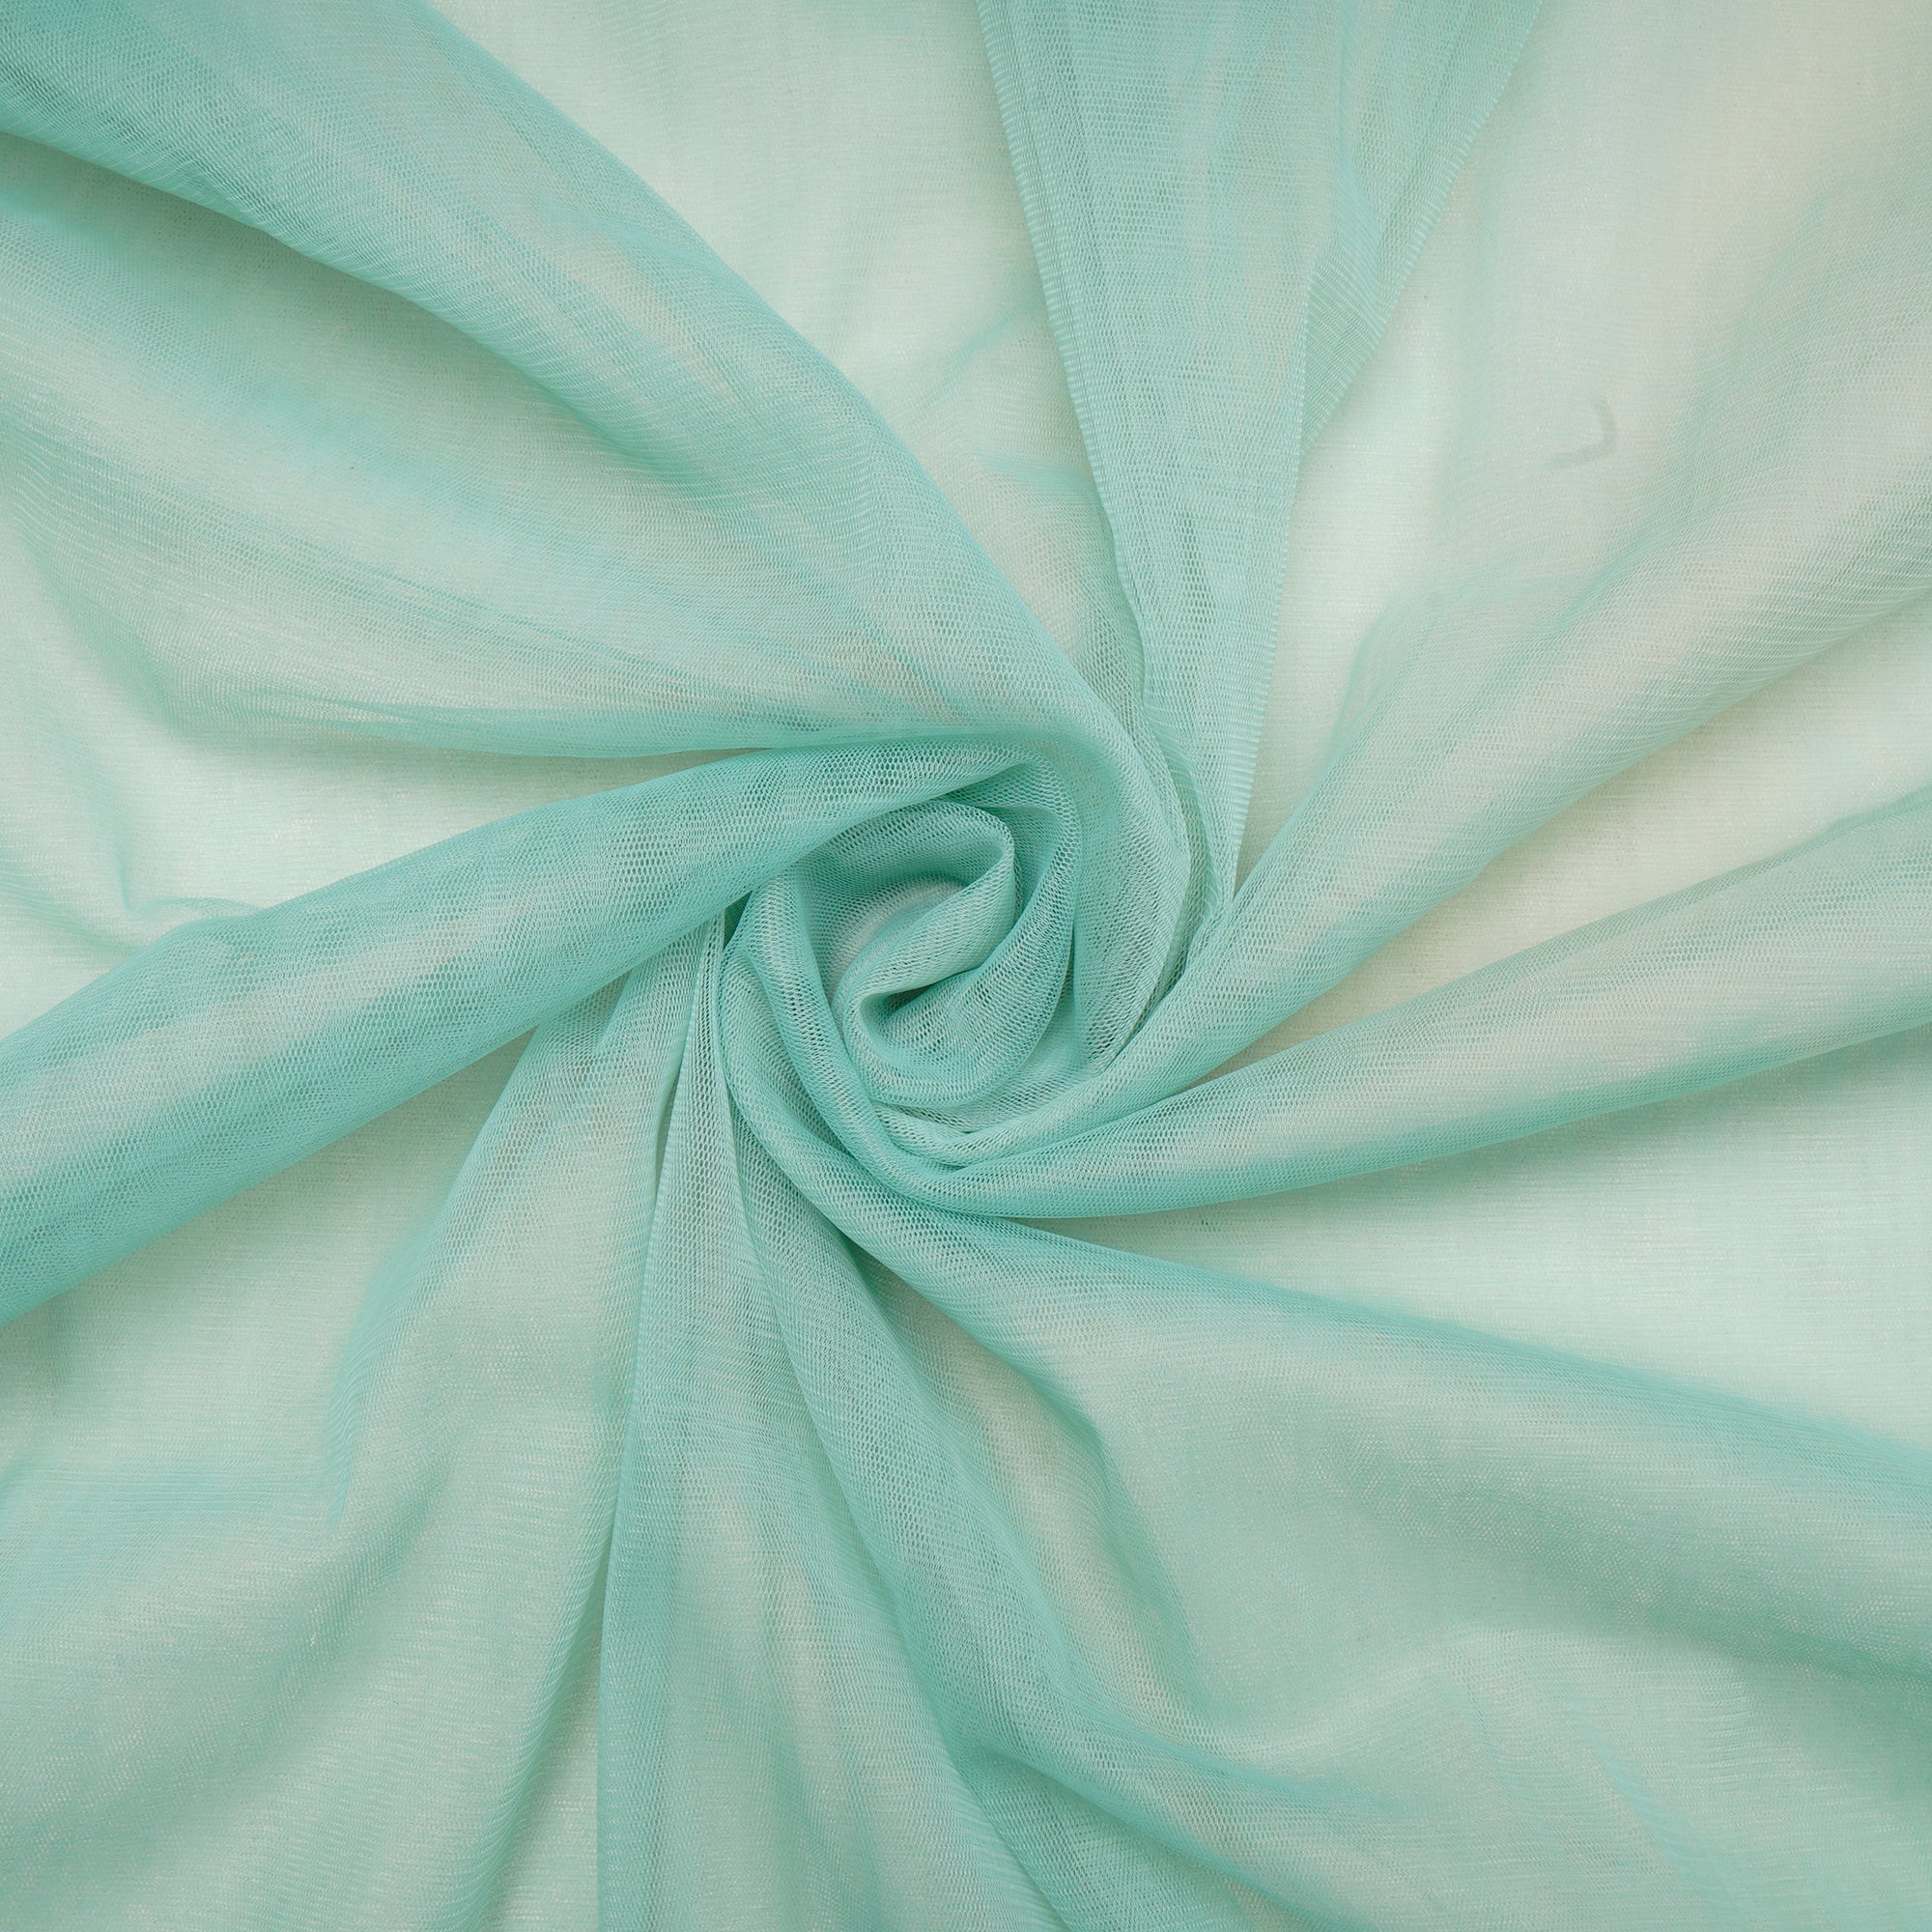 Aqua Green Color Nylon Butterfly Net Fabric